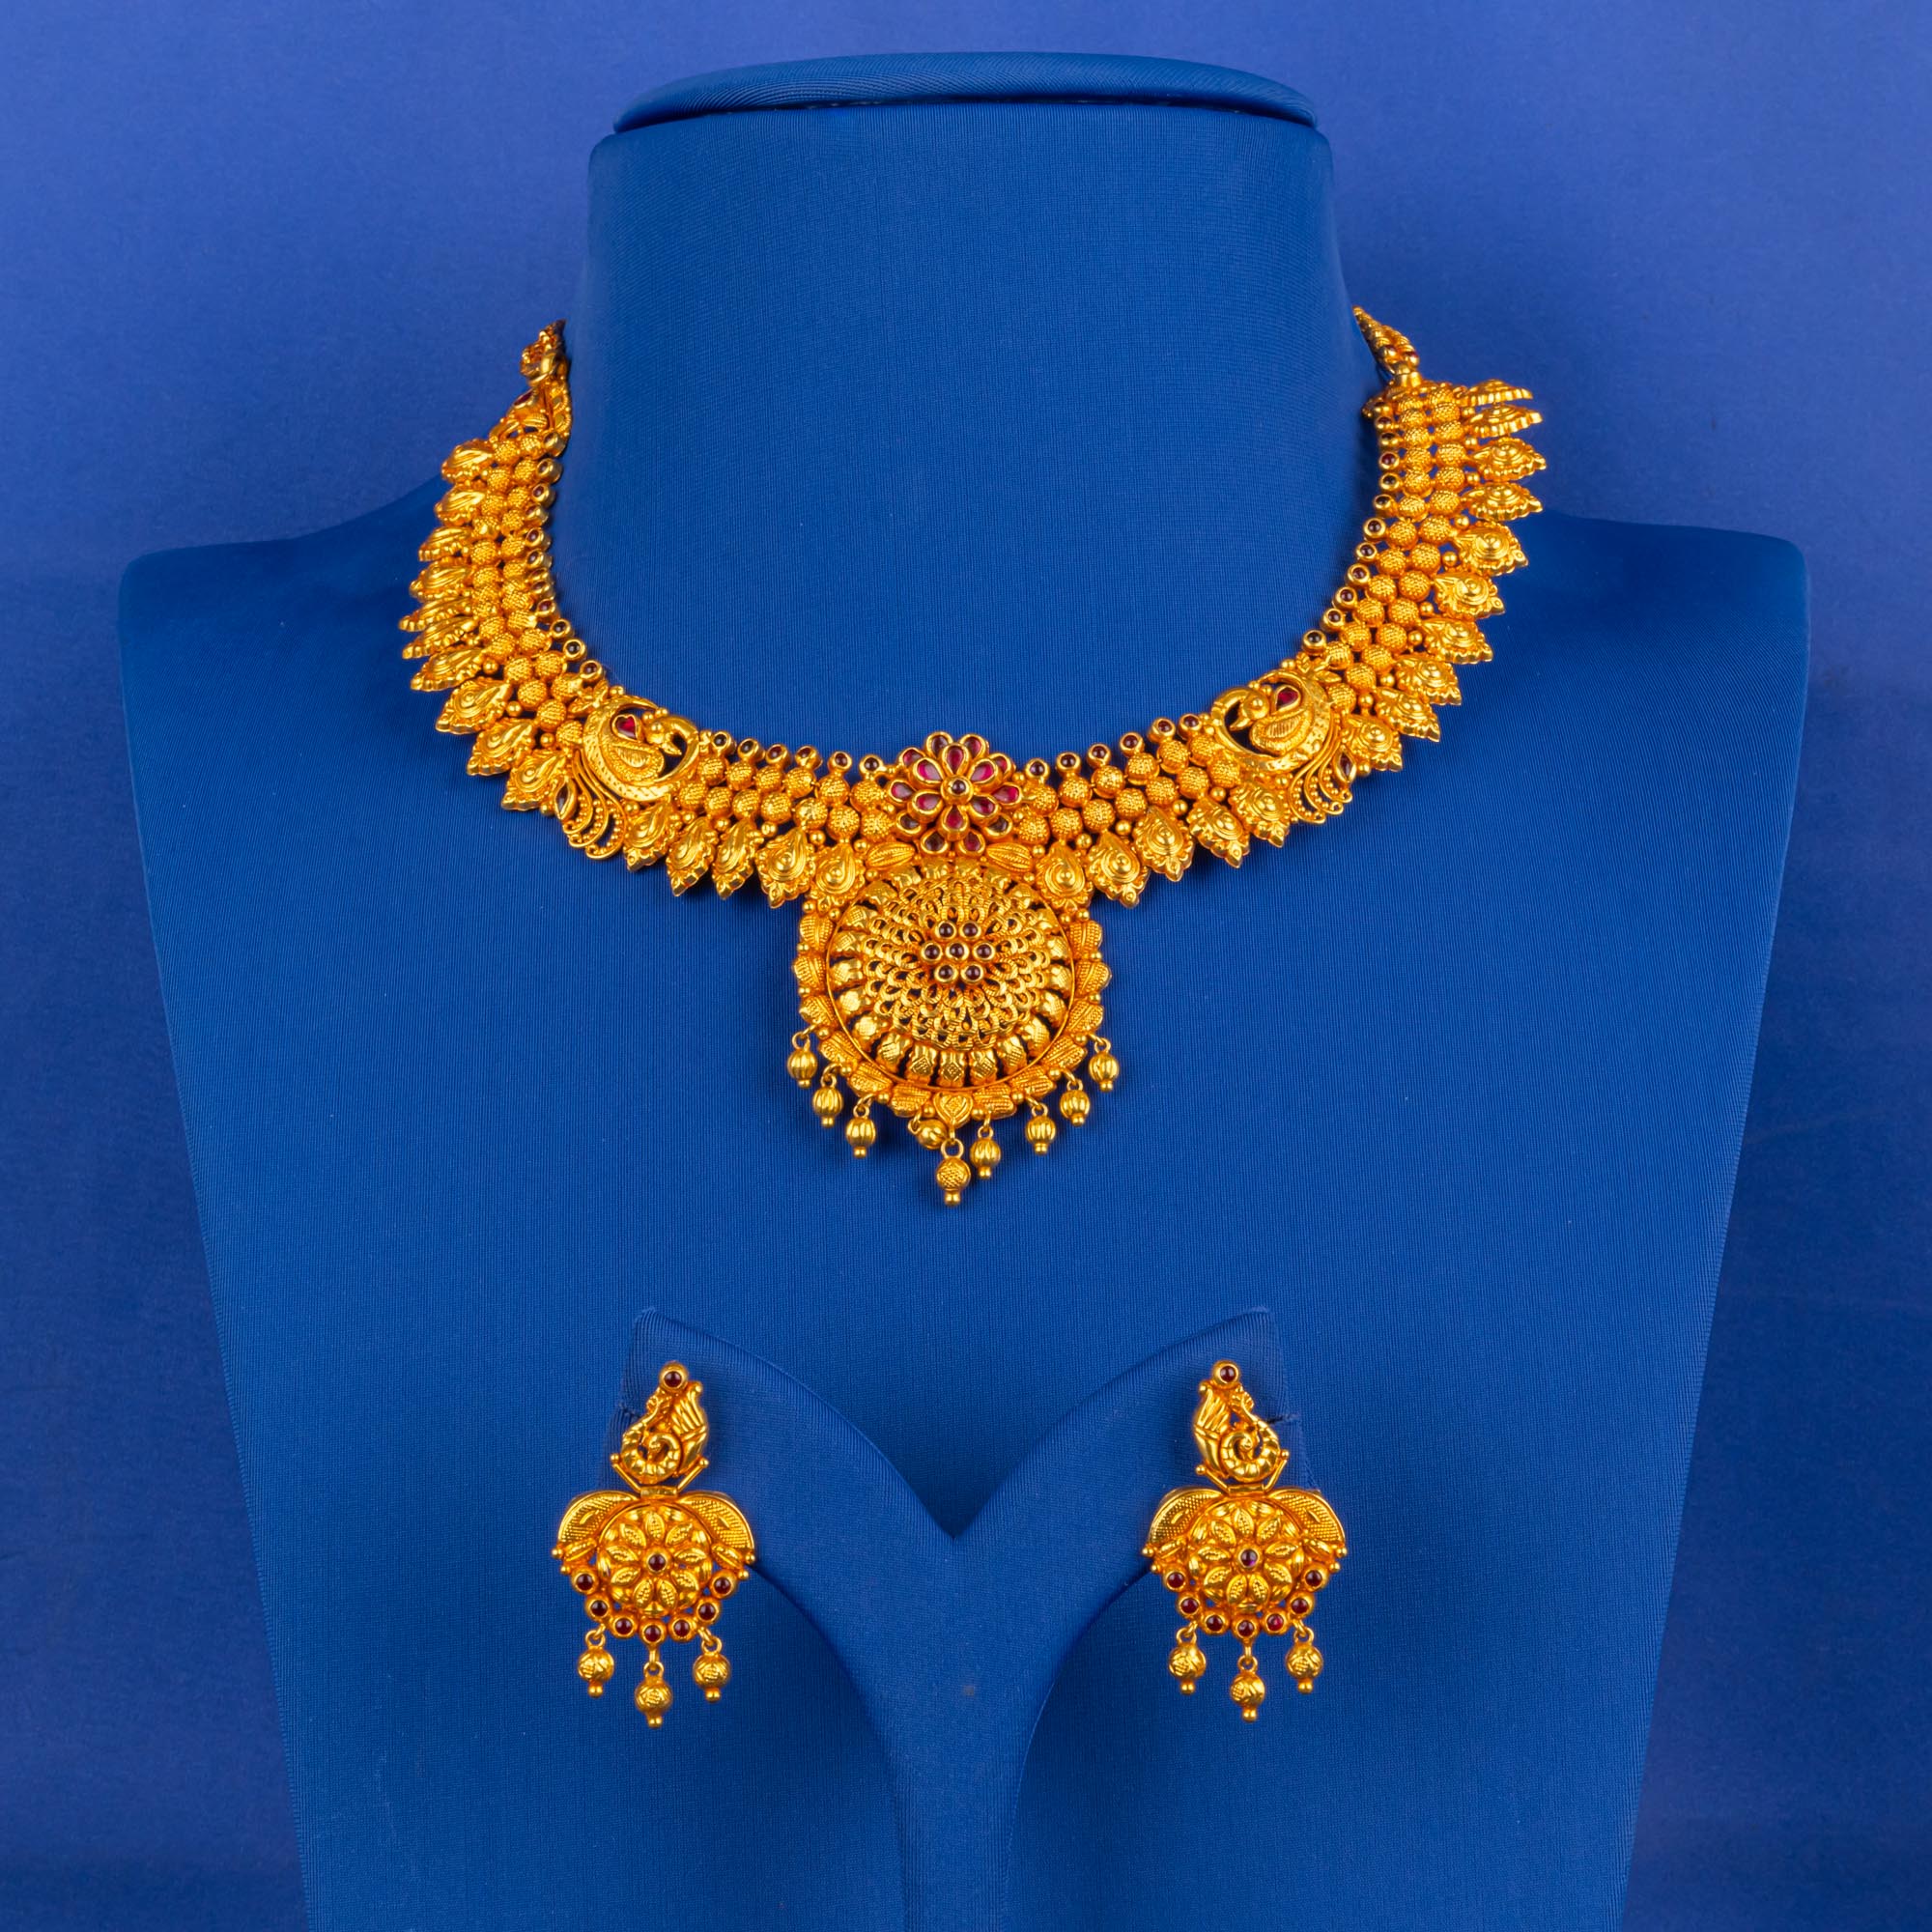 Handmade 22K Gold 'Antique' Necklace & Earrings Set